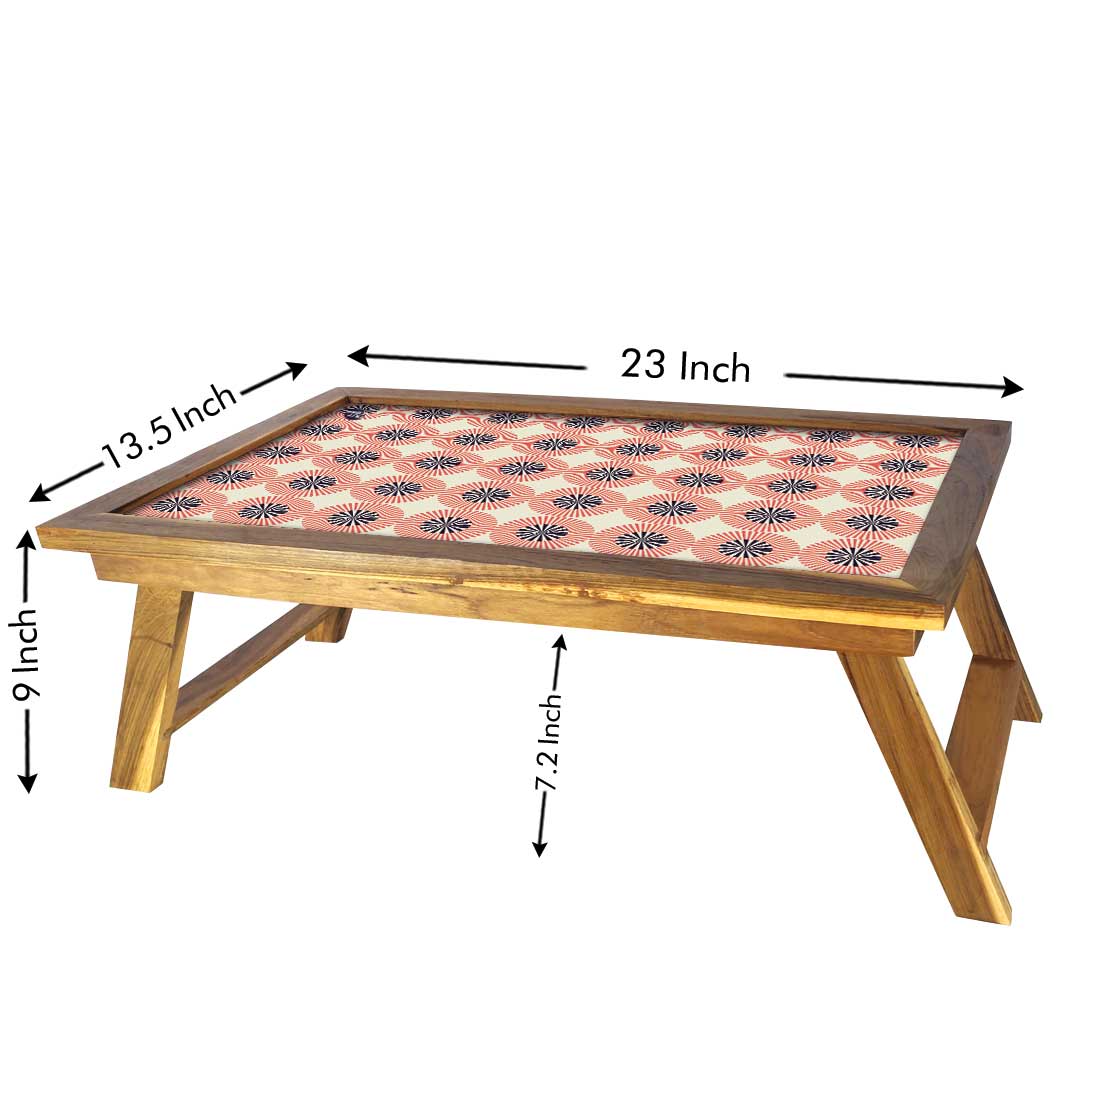 Nutcase Folding Laptop Table For Home Bed Lapdesk Breakfast Table Foldable Teak Wooden Study Desk - Retro Circle Pattern Nutcase